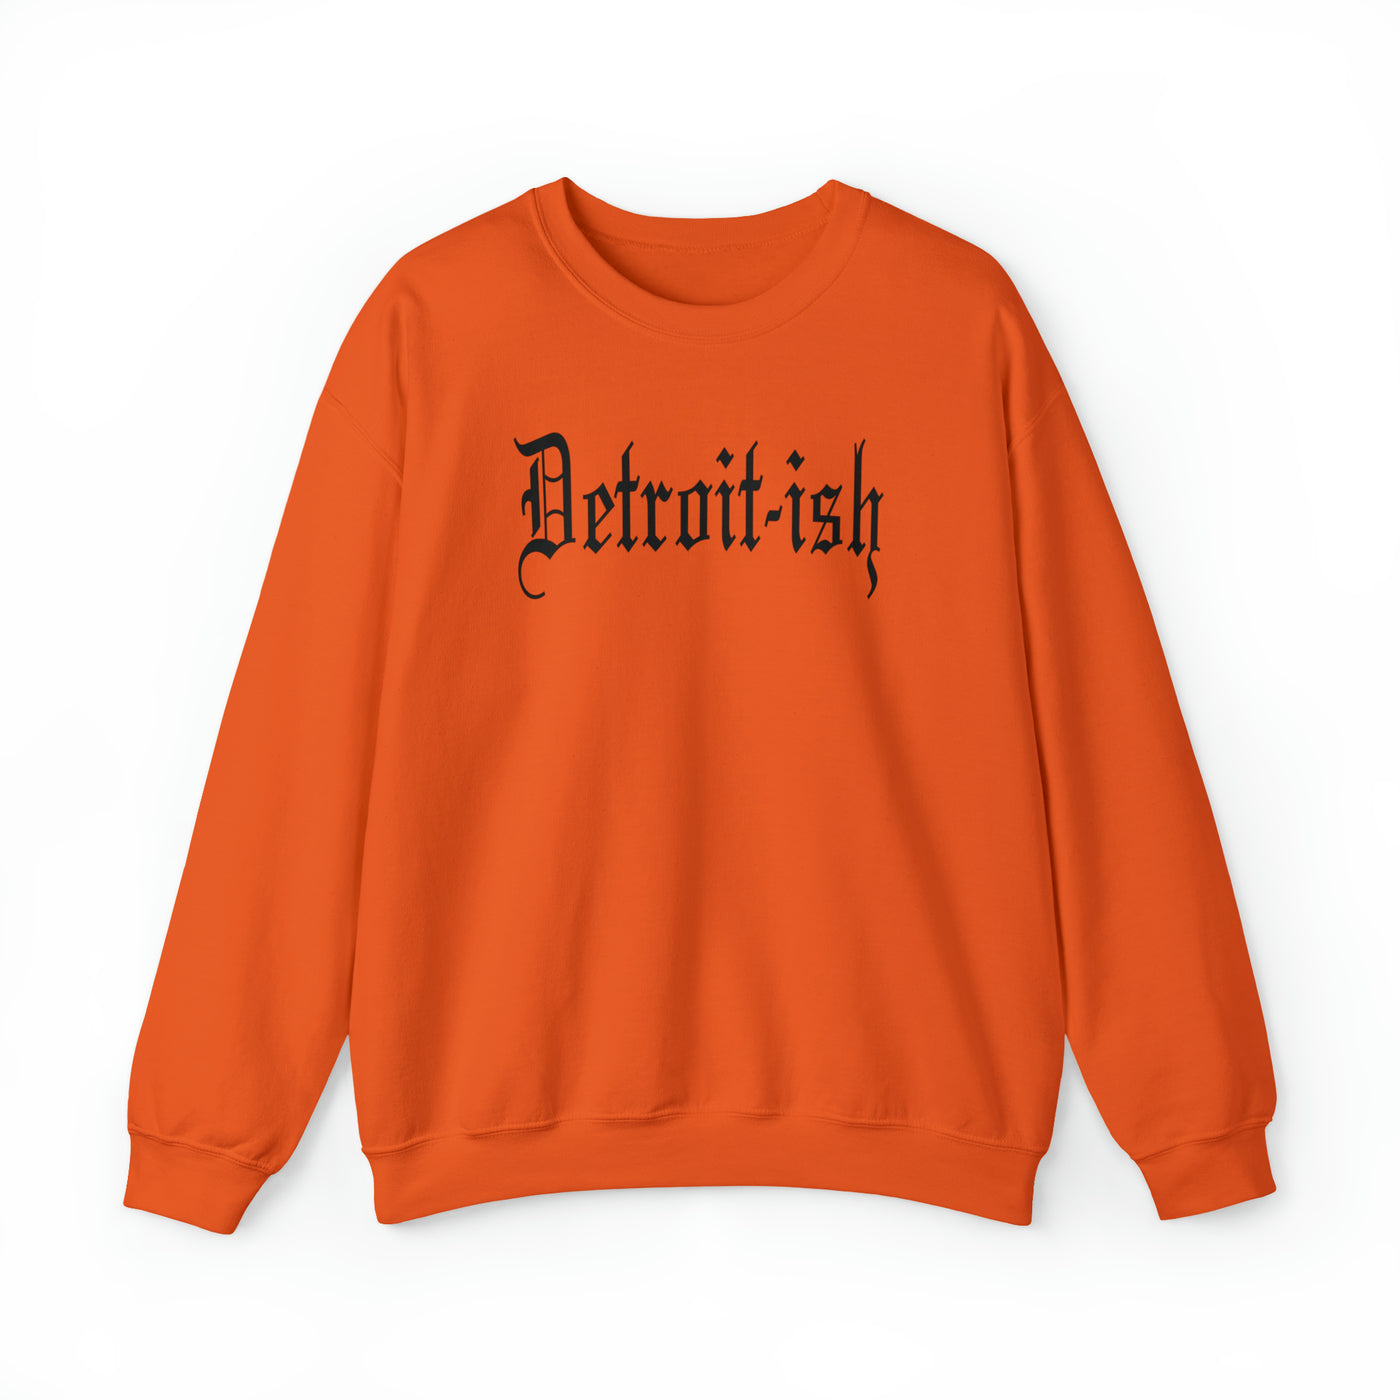 Detroit-ish Crewneck Sweatshirt